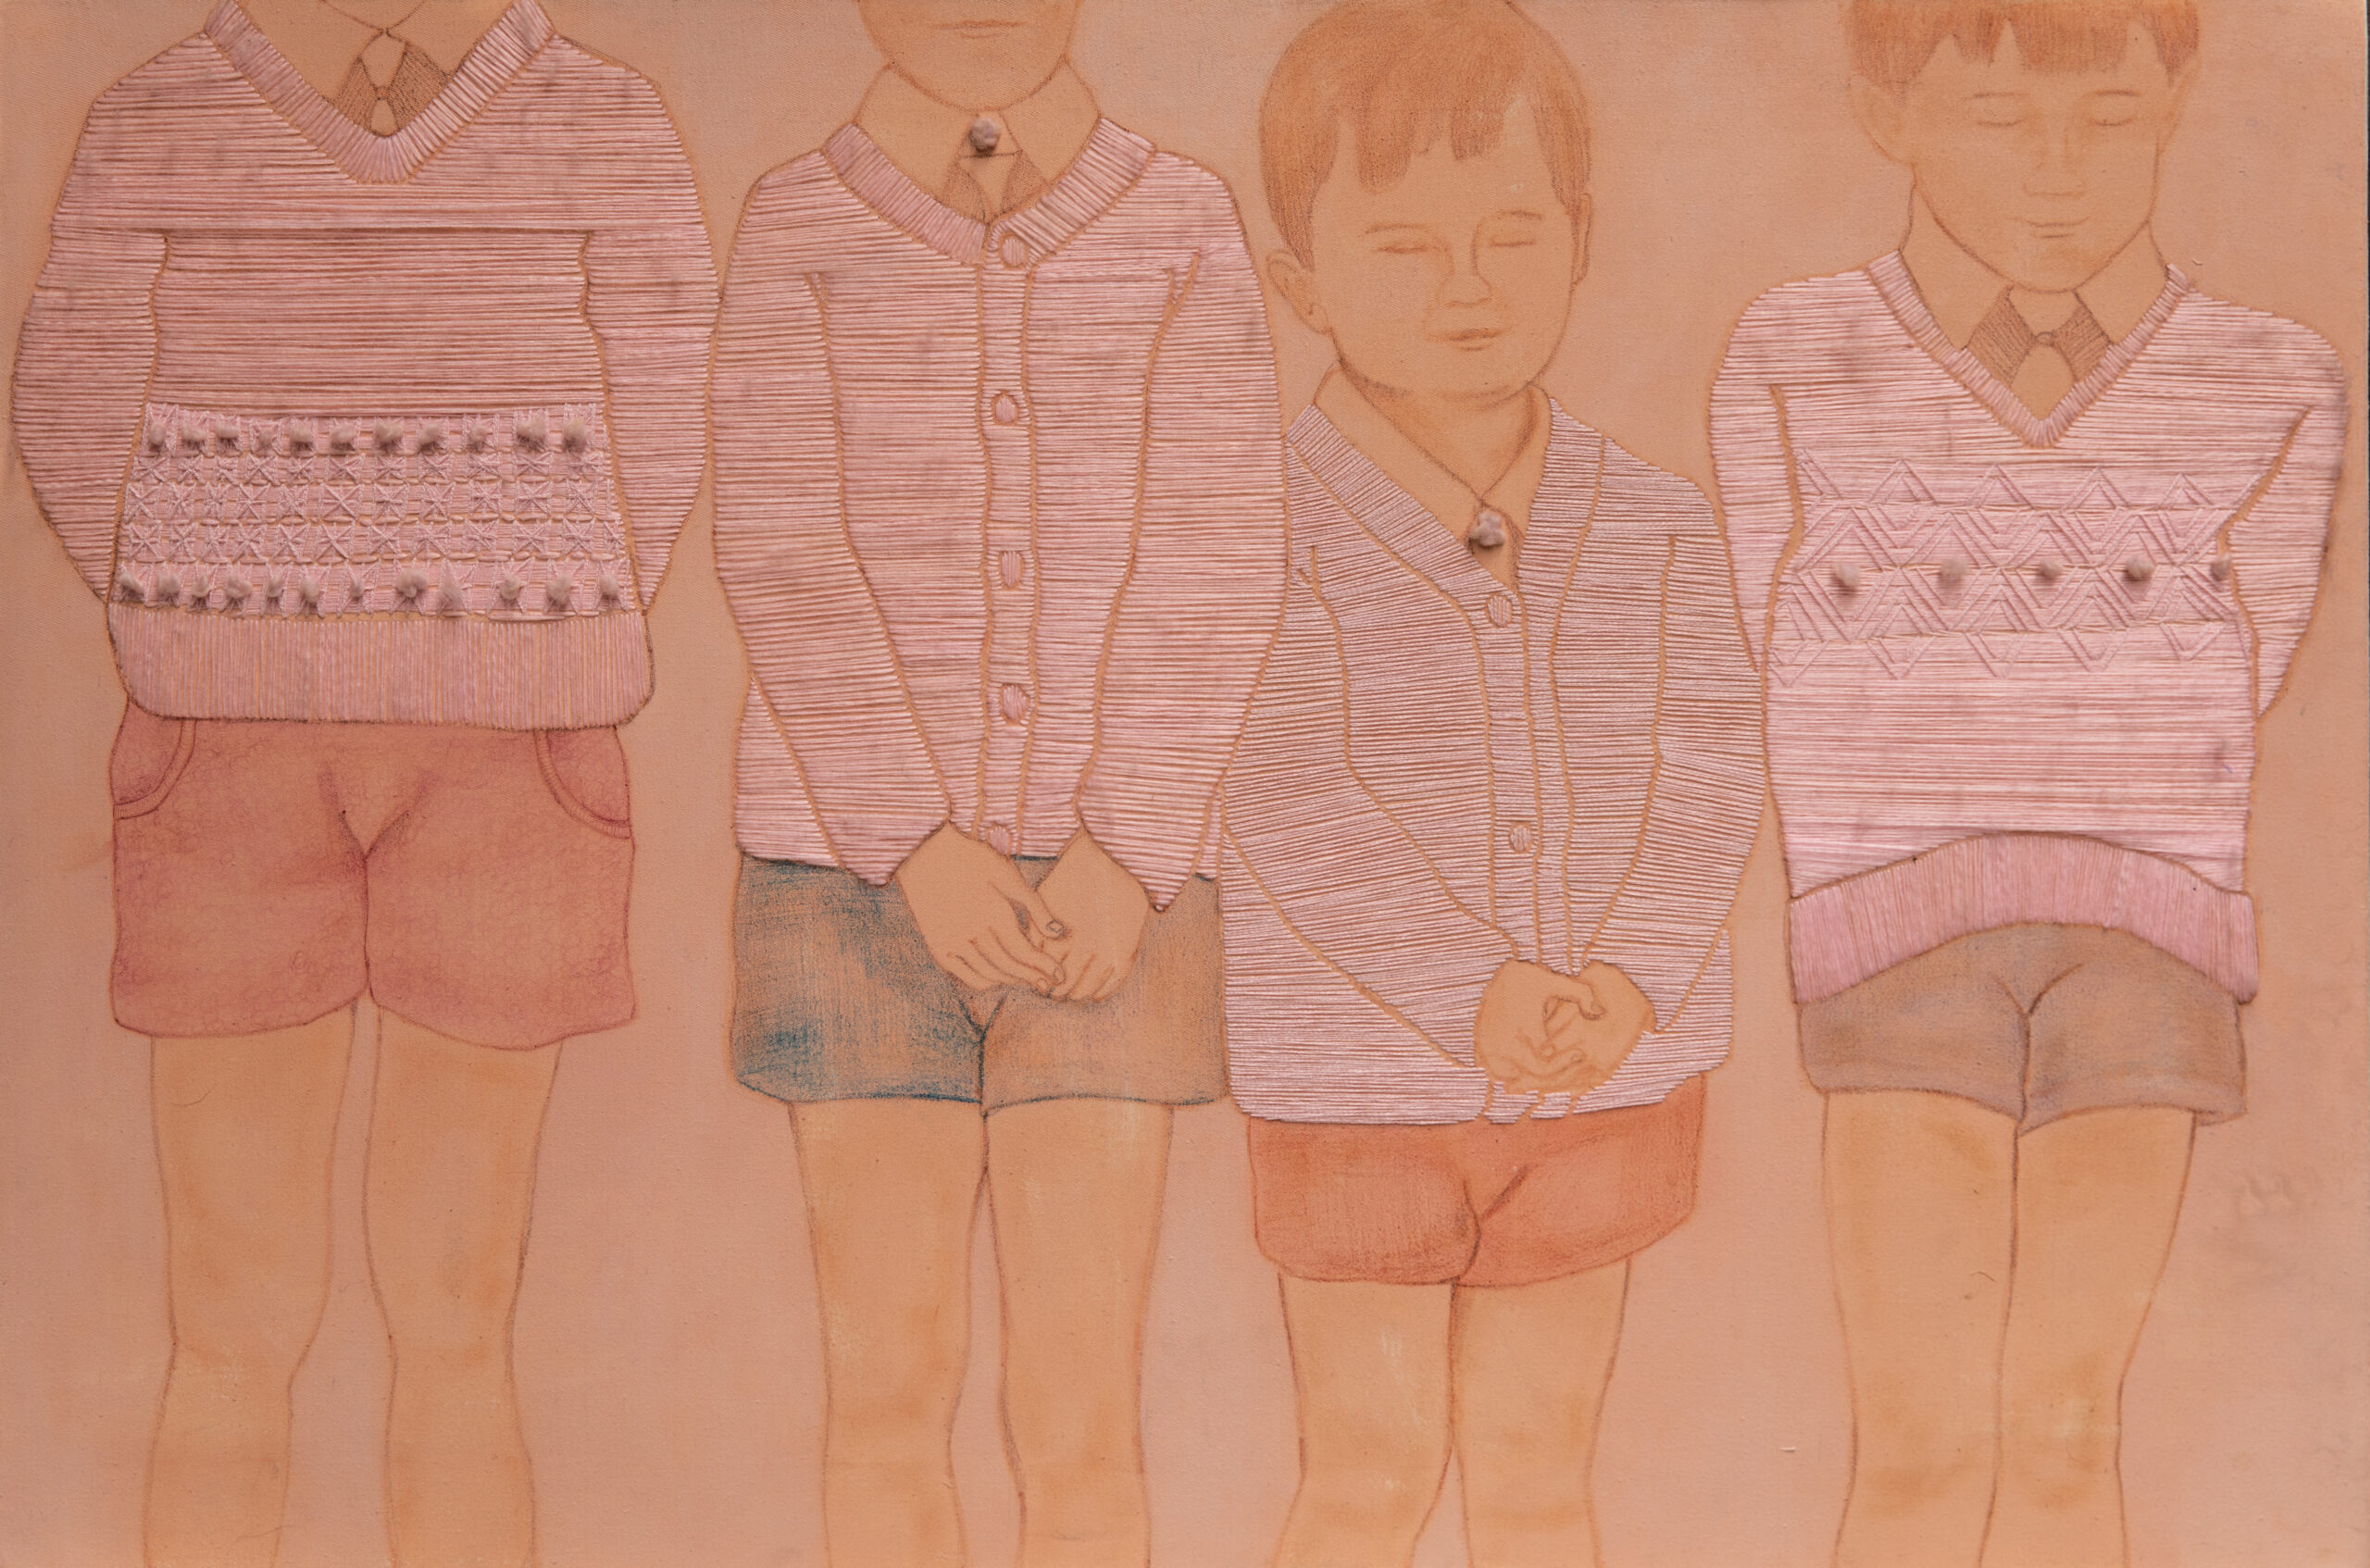 En penitencia, mixed media on canvas, 50x80cm, 2014.|